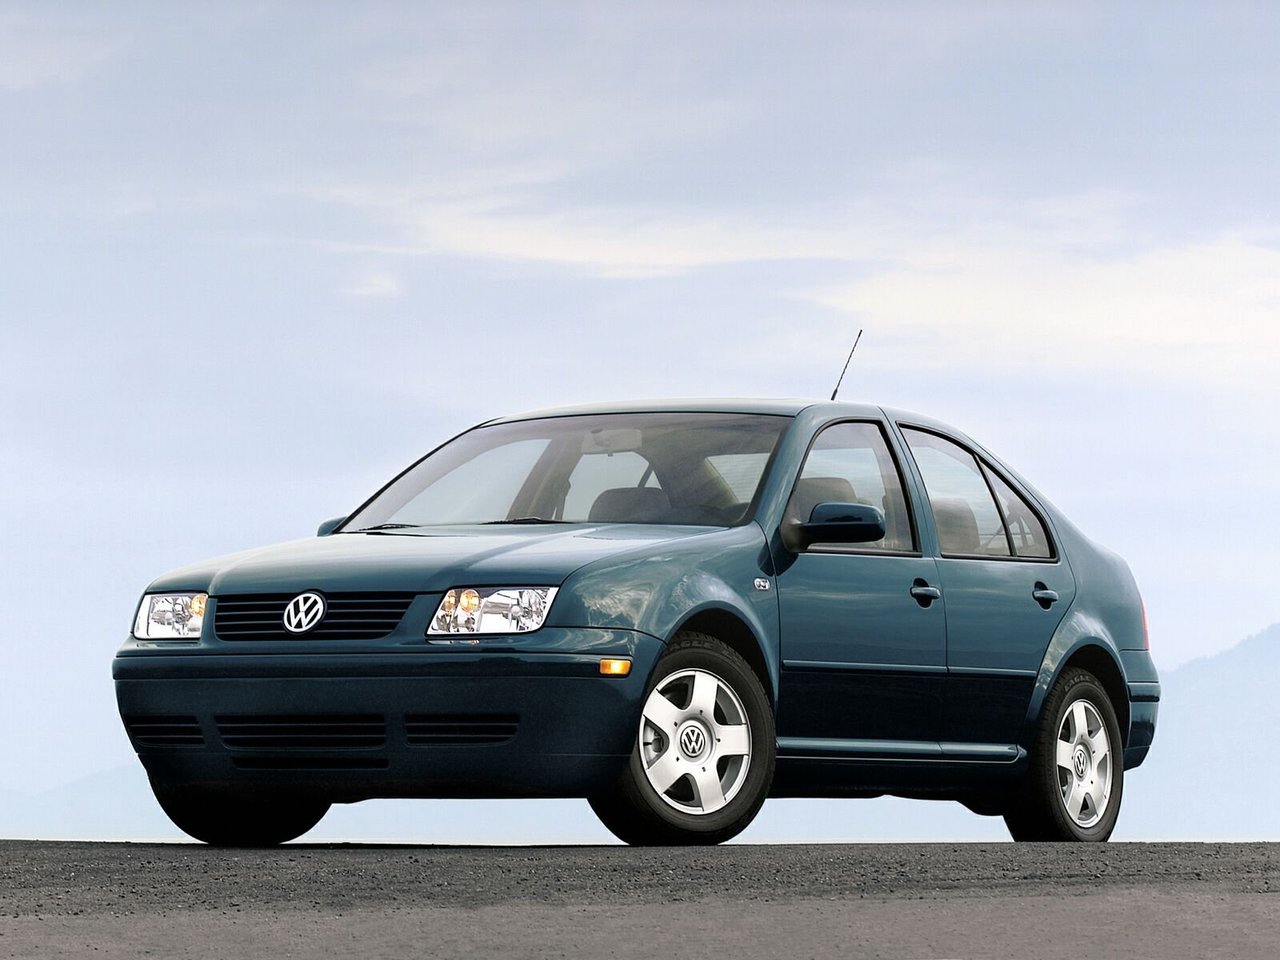 Расход газа четырнадцати комплектаций седана Volkswagen Jetta. Разница стоимости заправки газом и бензином. Автономный пробег до и после установки ГБО.